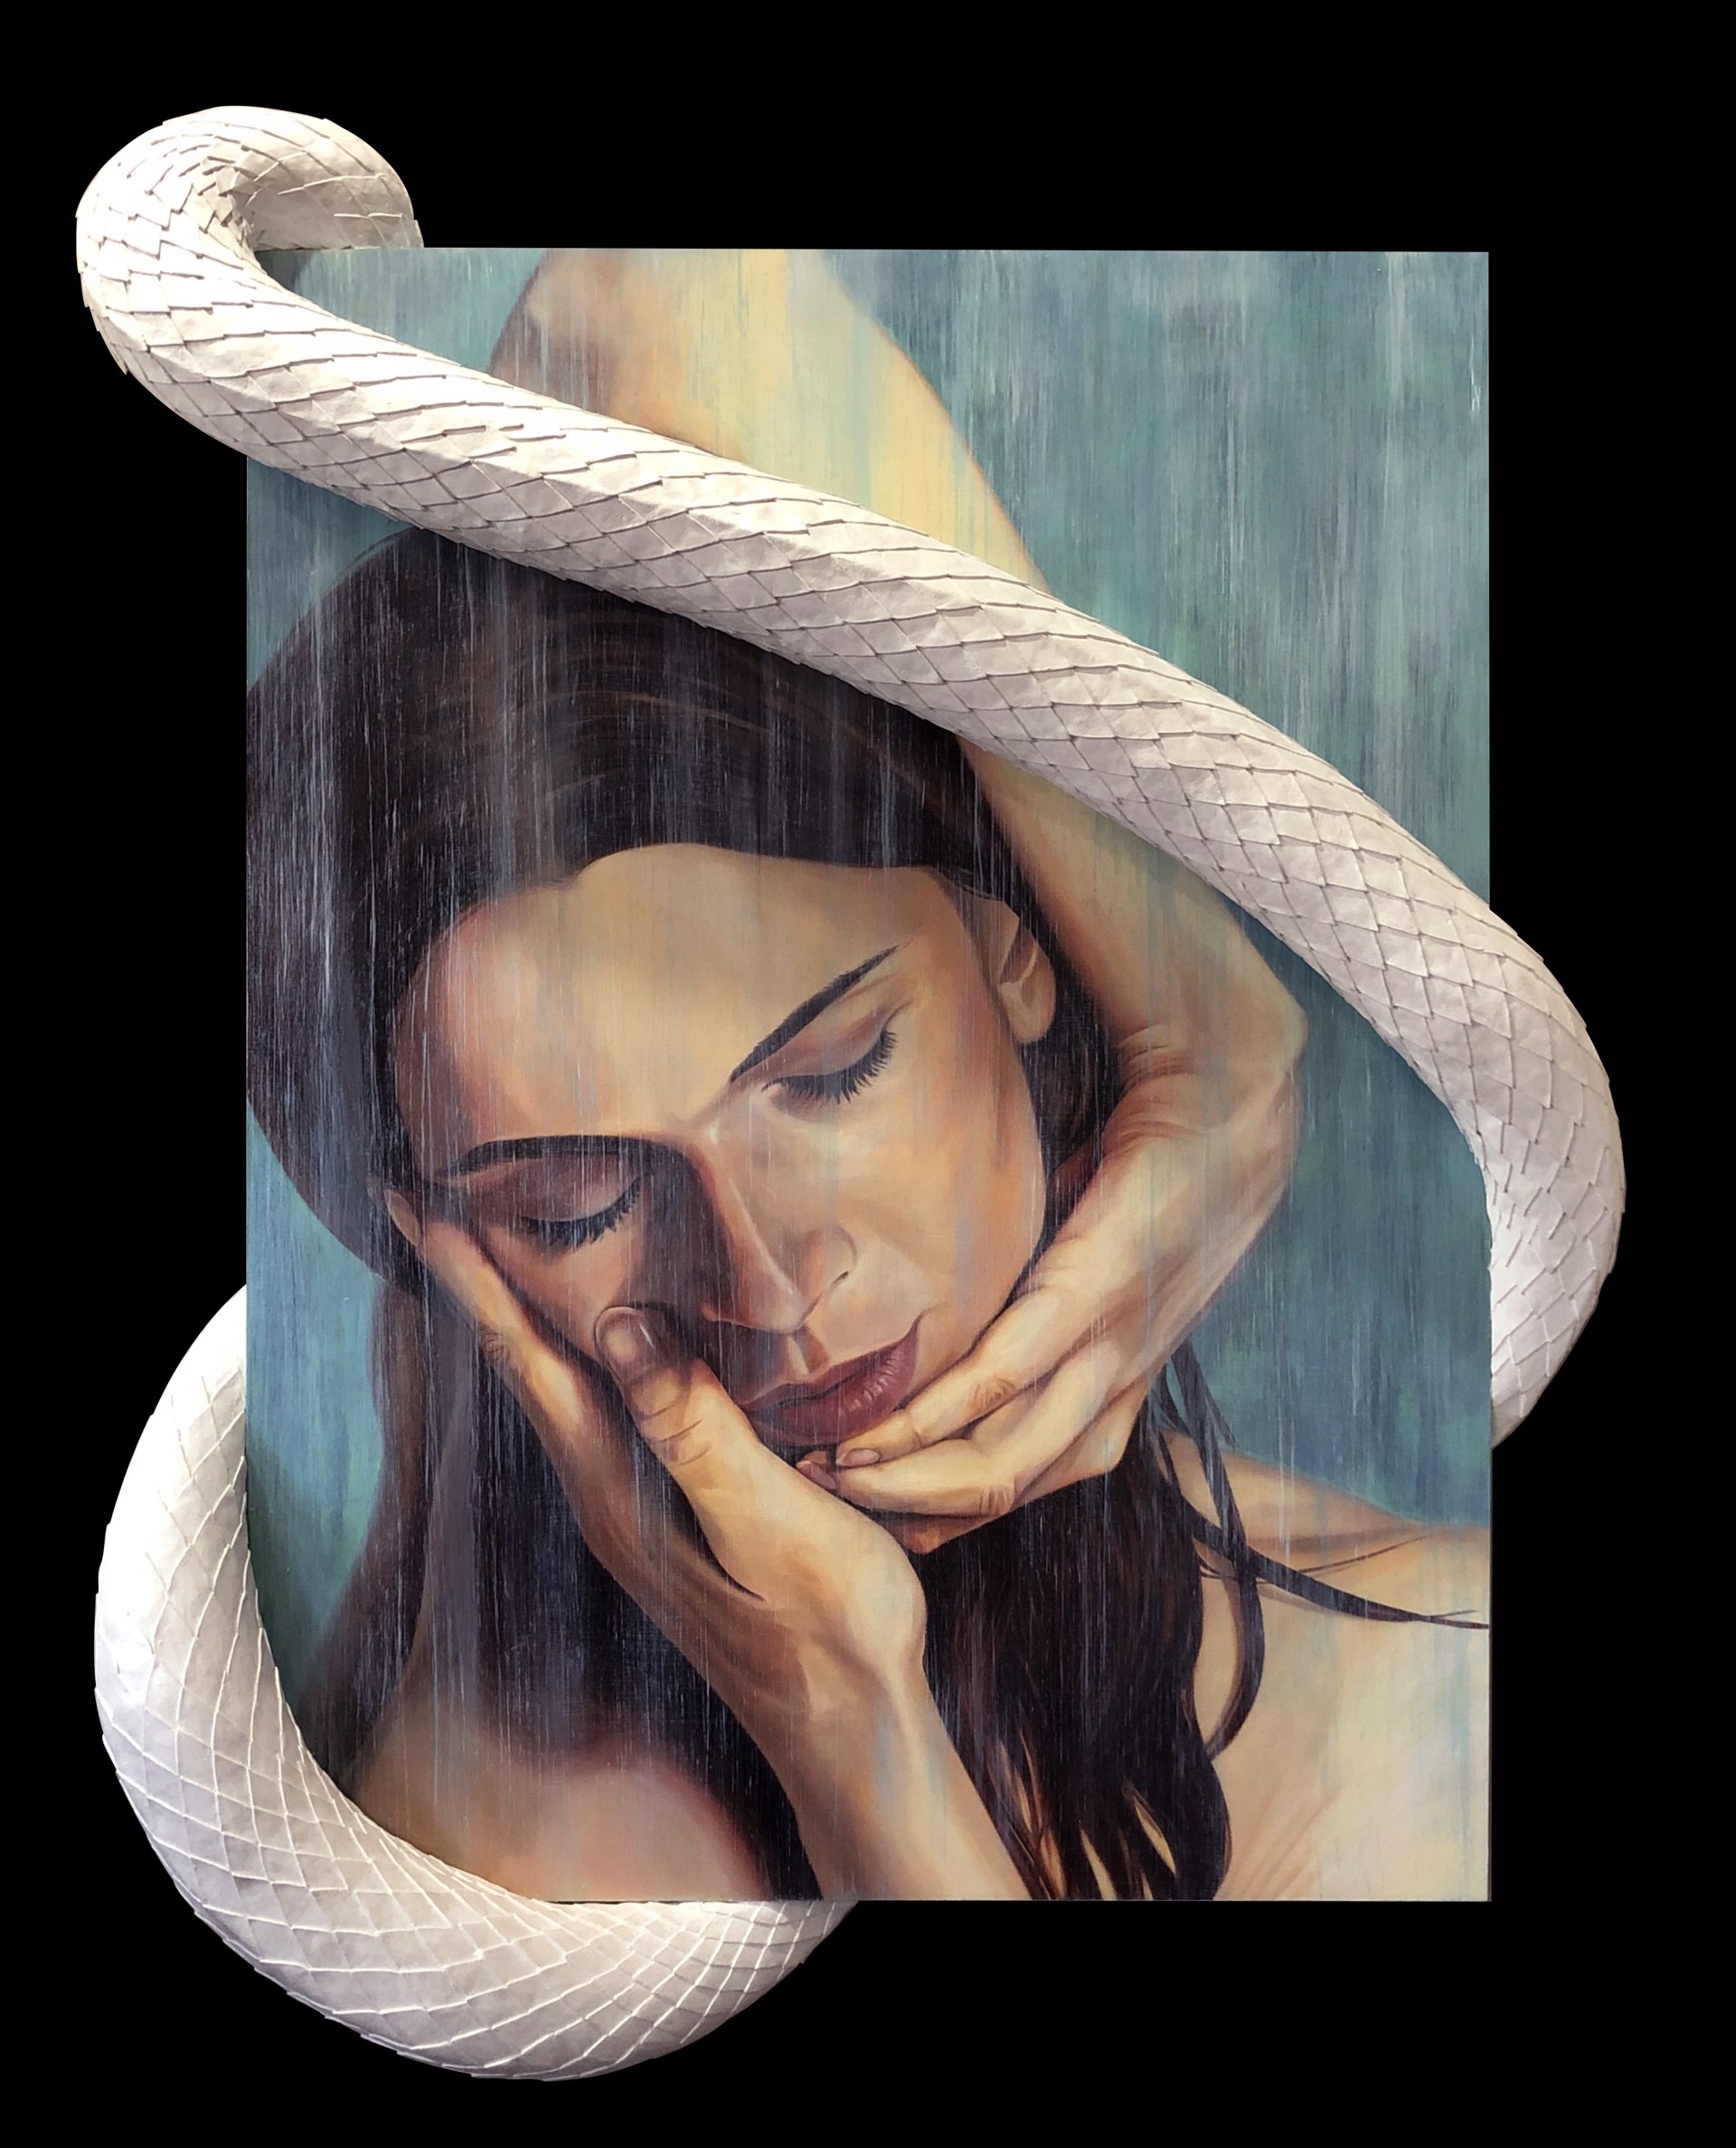 Swimming With Medusa 1 by Lisa Matrundola